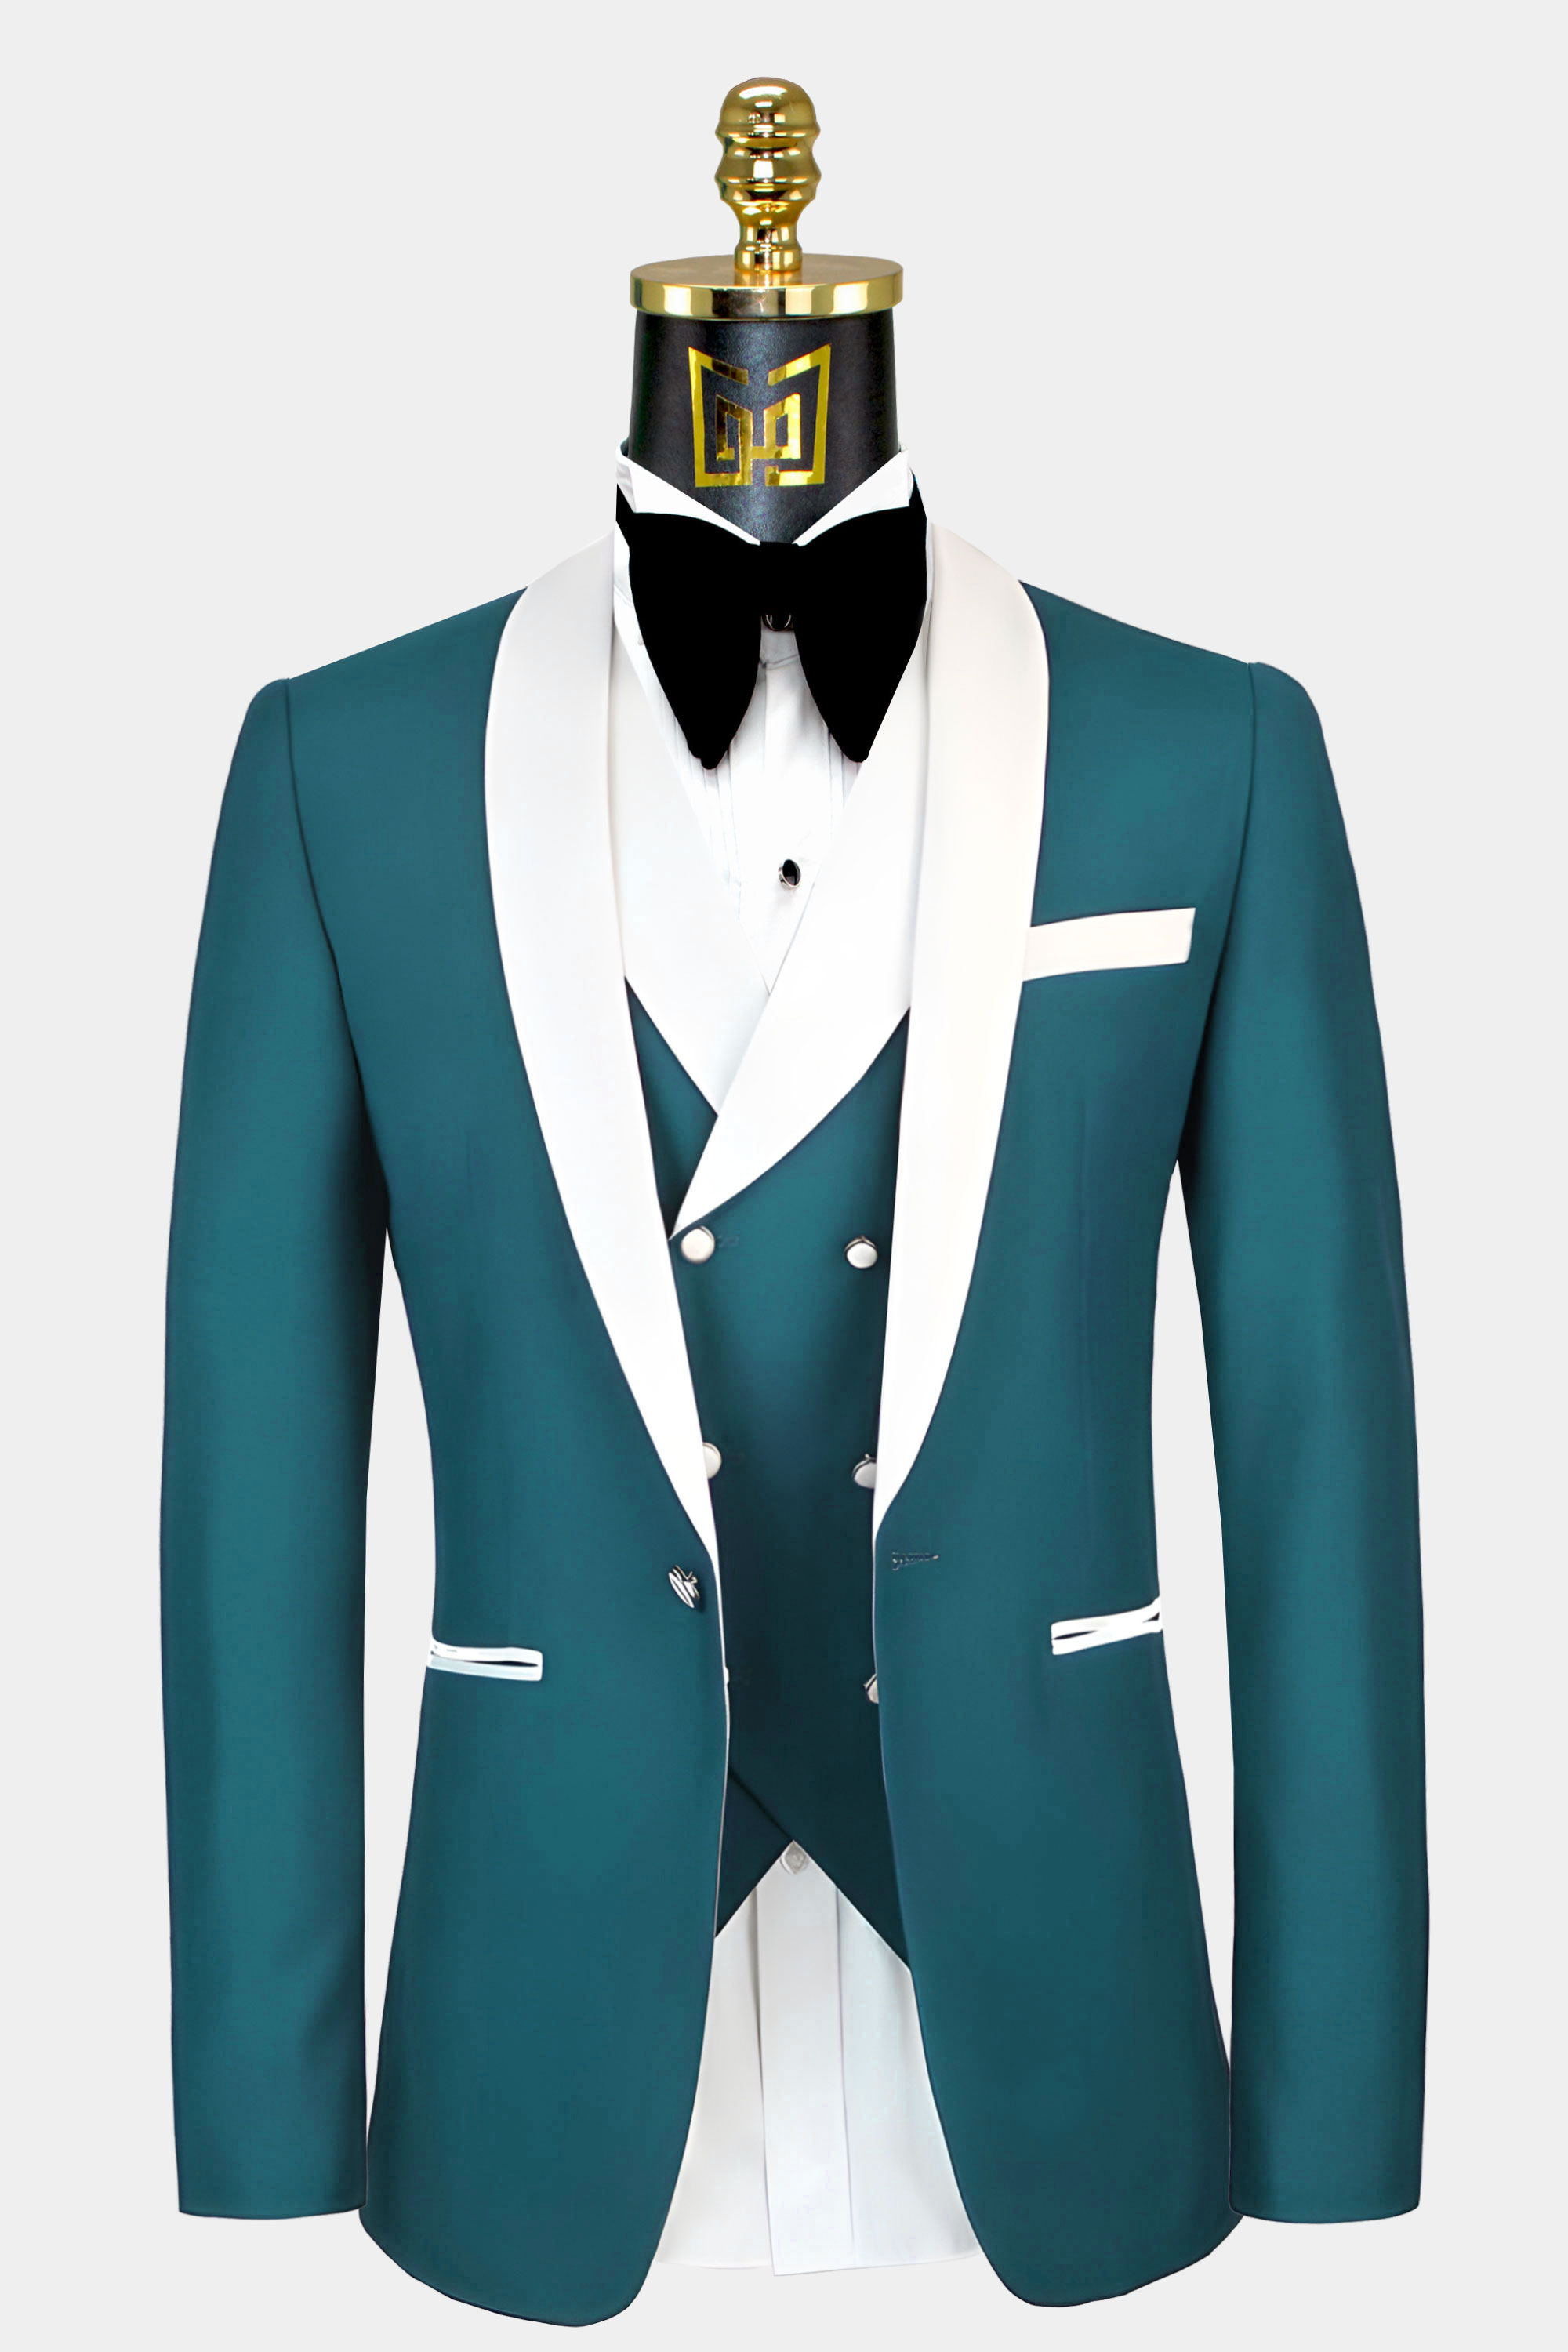 Teal-Blue-and-White-Tuxedo-Jacket-from-Gentlemansguru.com.